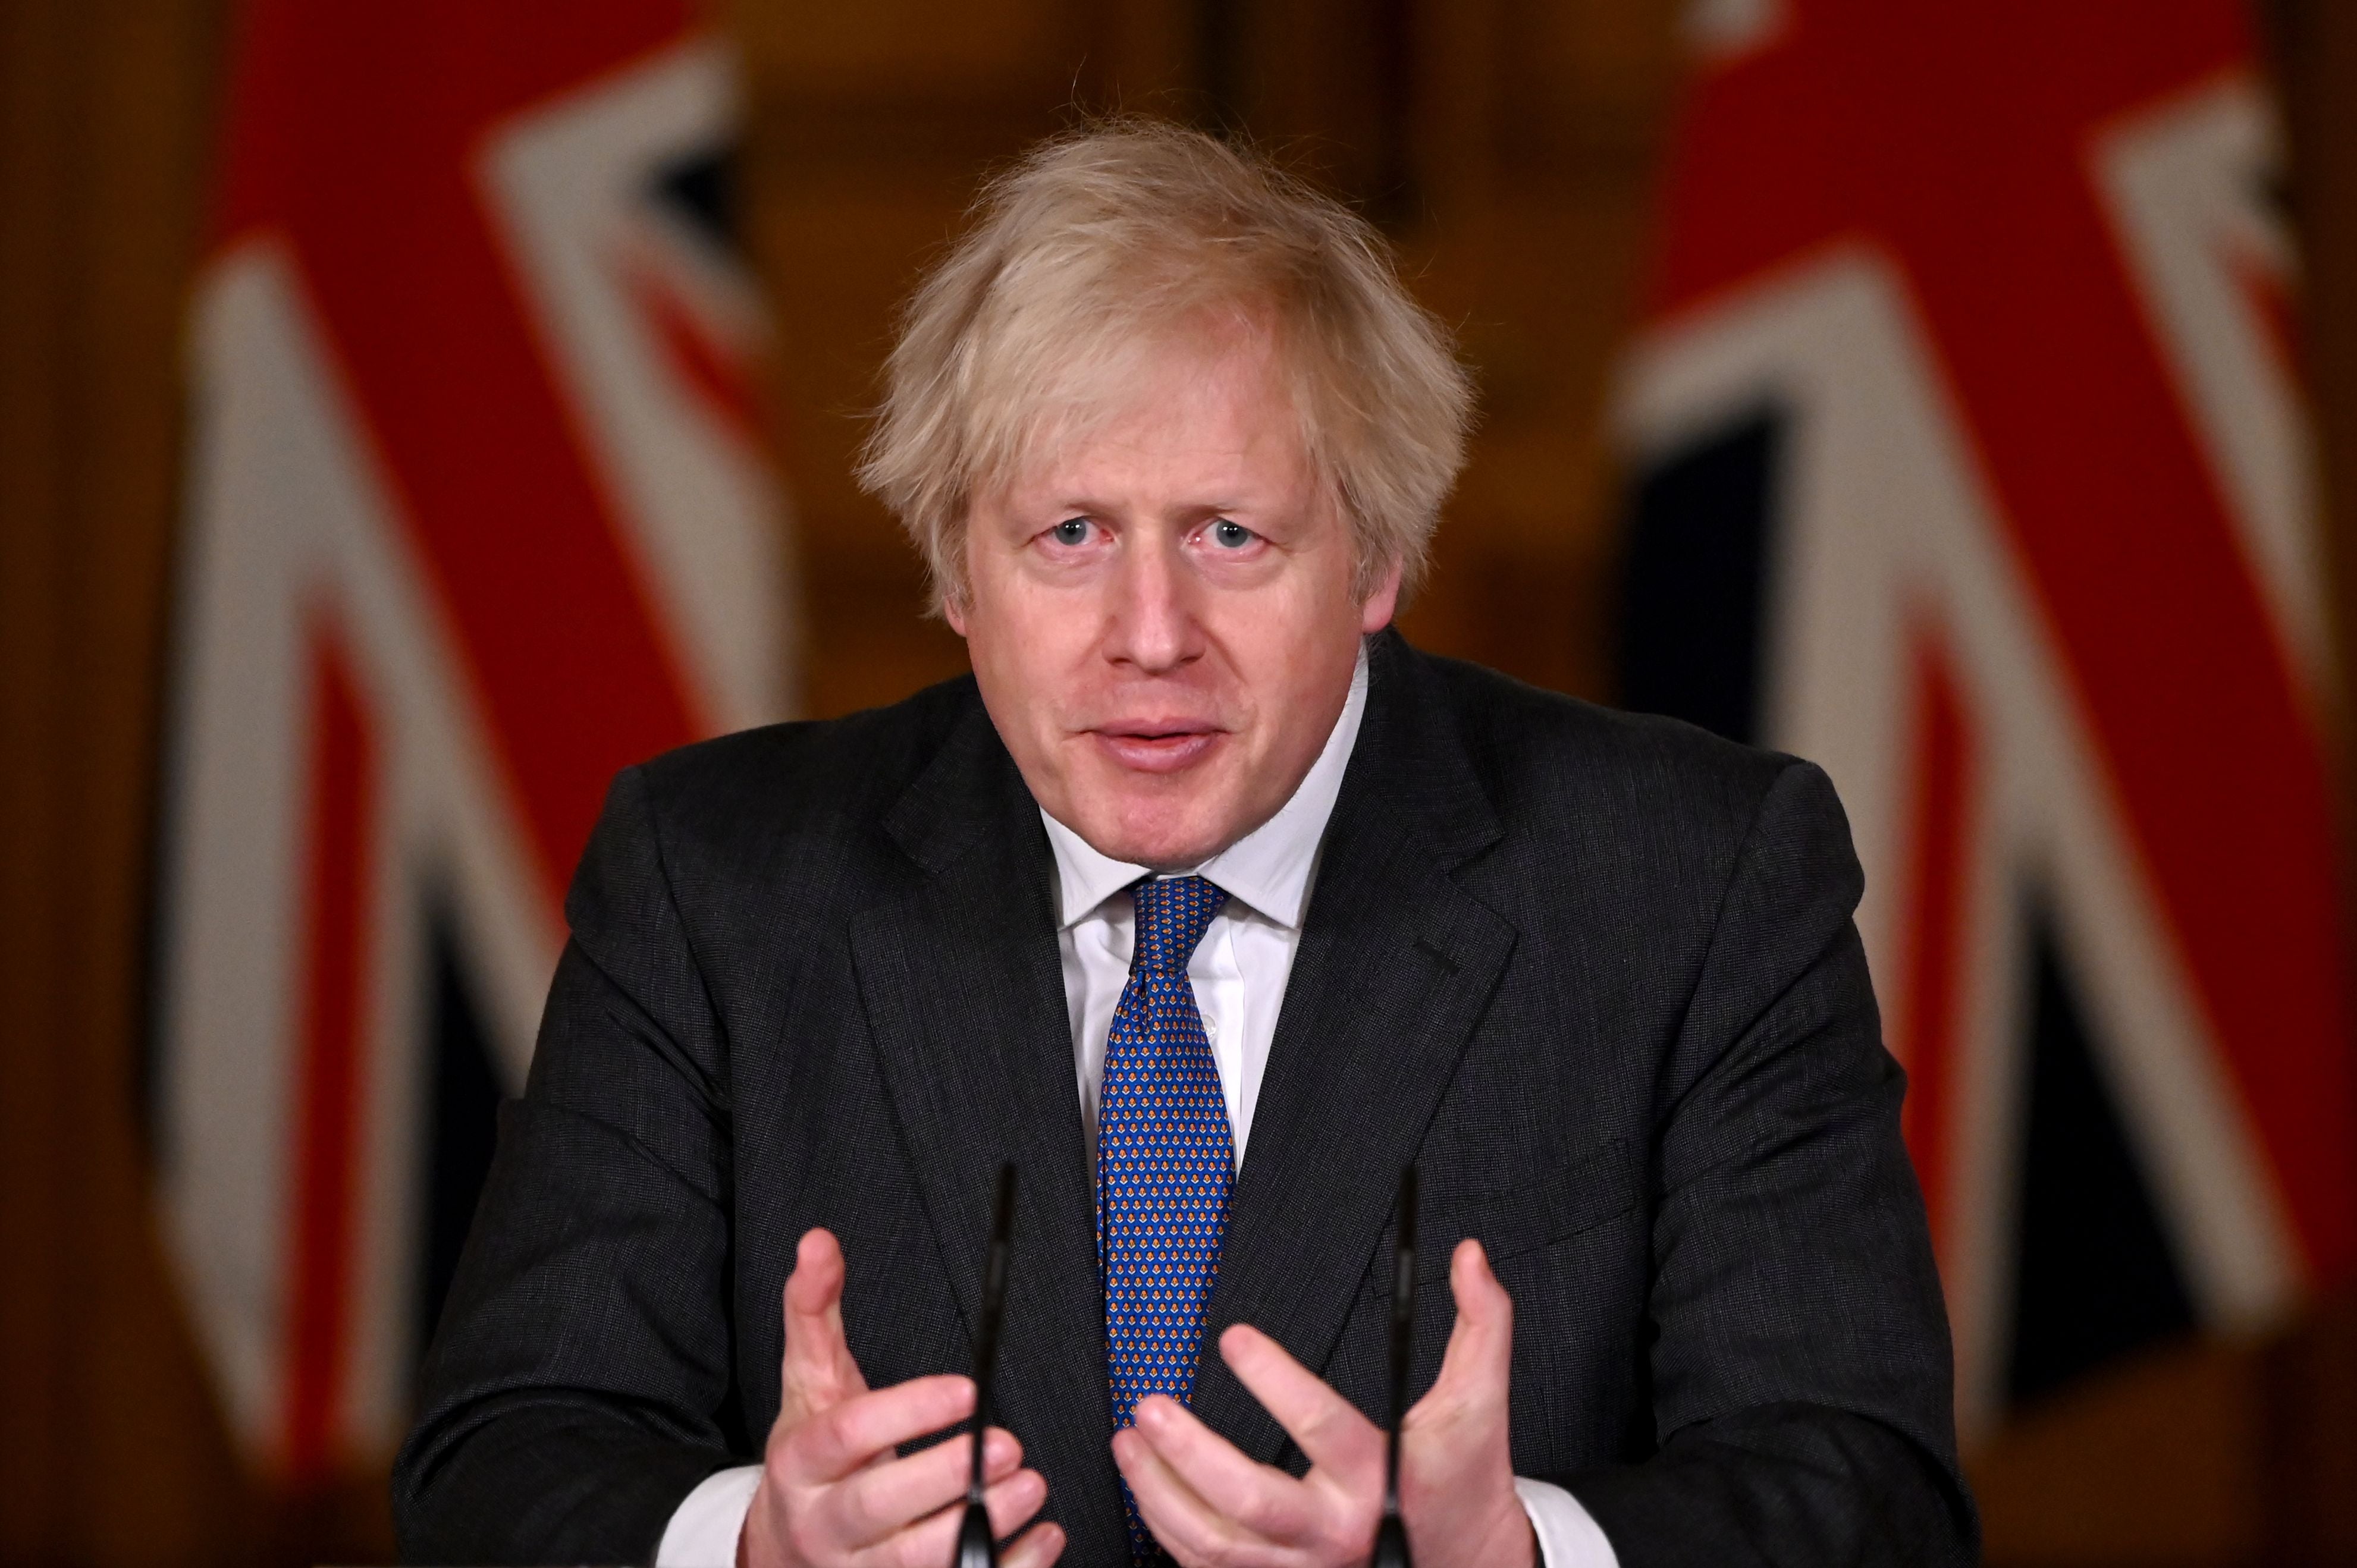 Downing Street said the ‘populist’ label was unhelpful